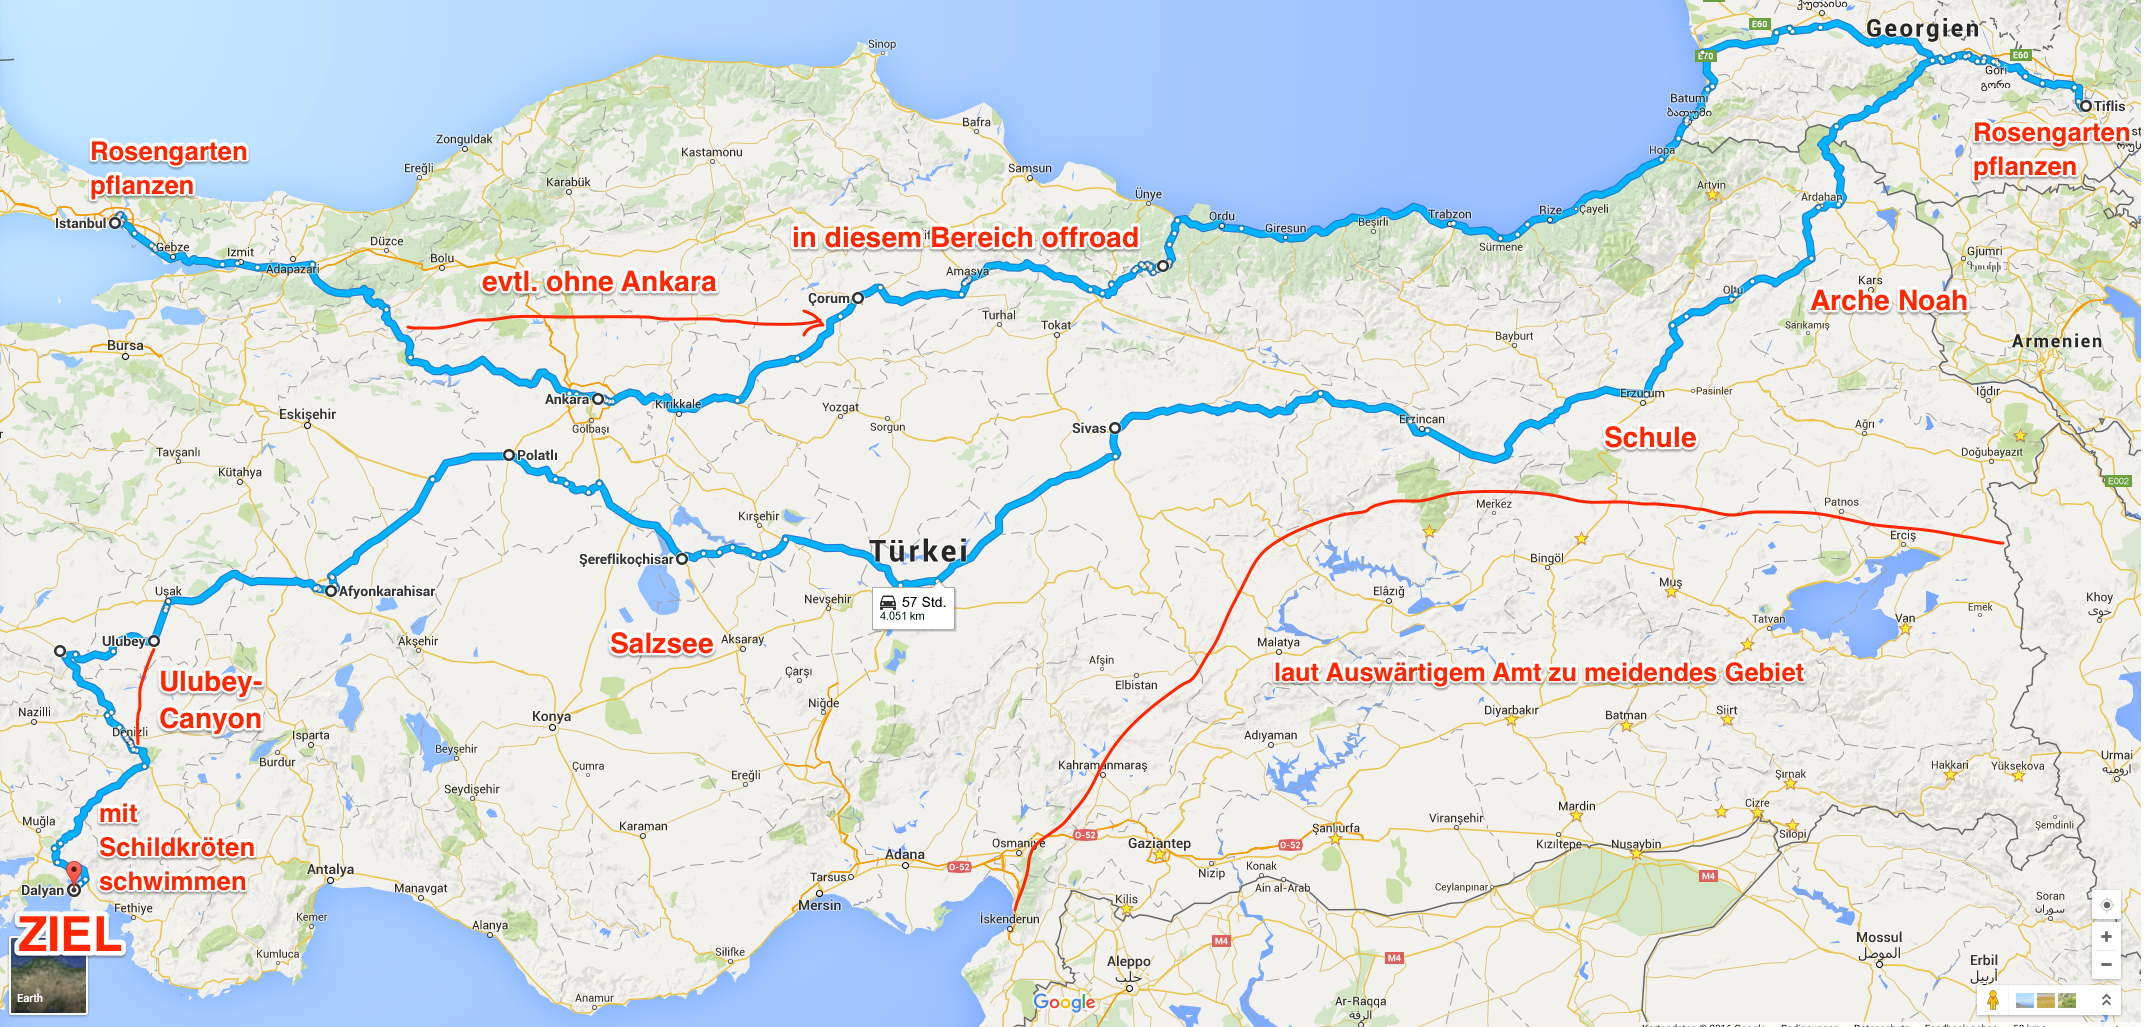 Propellerheads Allgäu-Orient-Rallye Route 2015 Türkei - Georgien - Ägäis - mit Infos 4